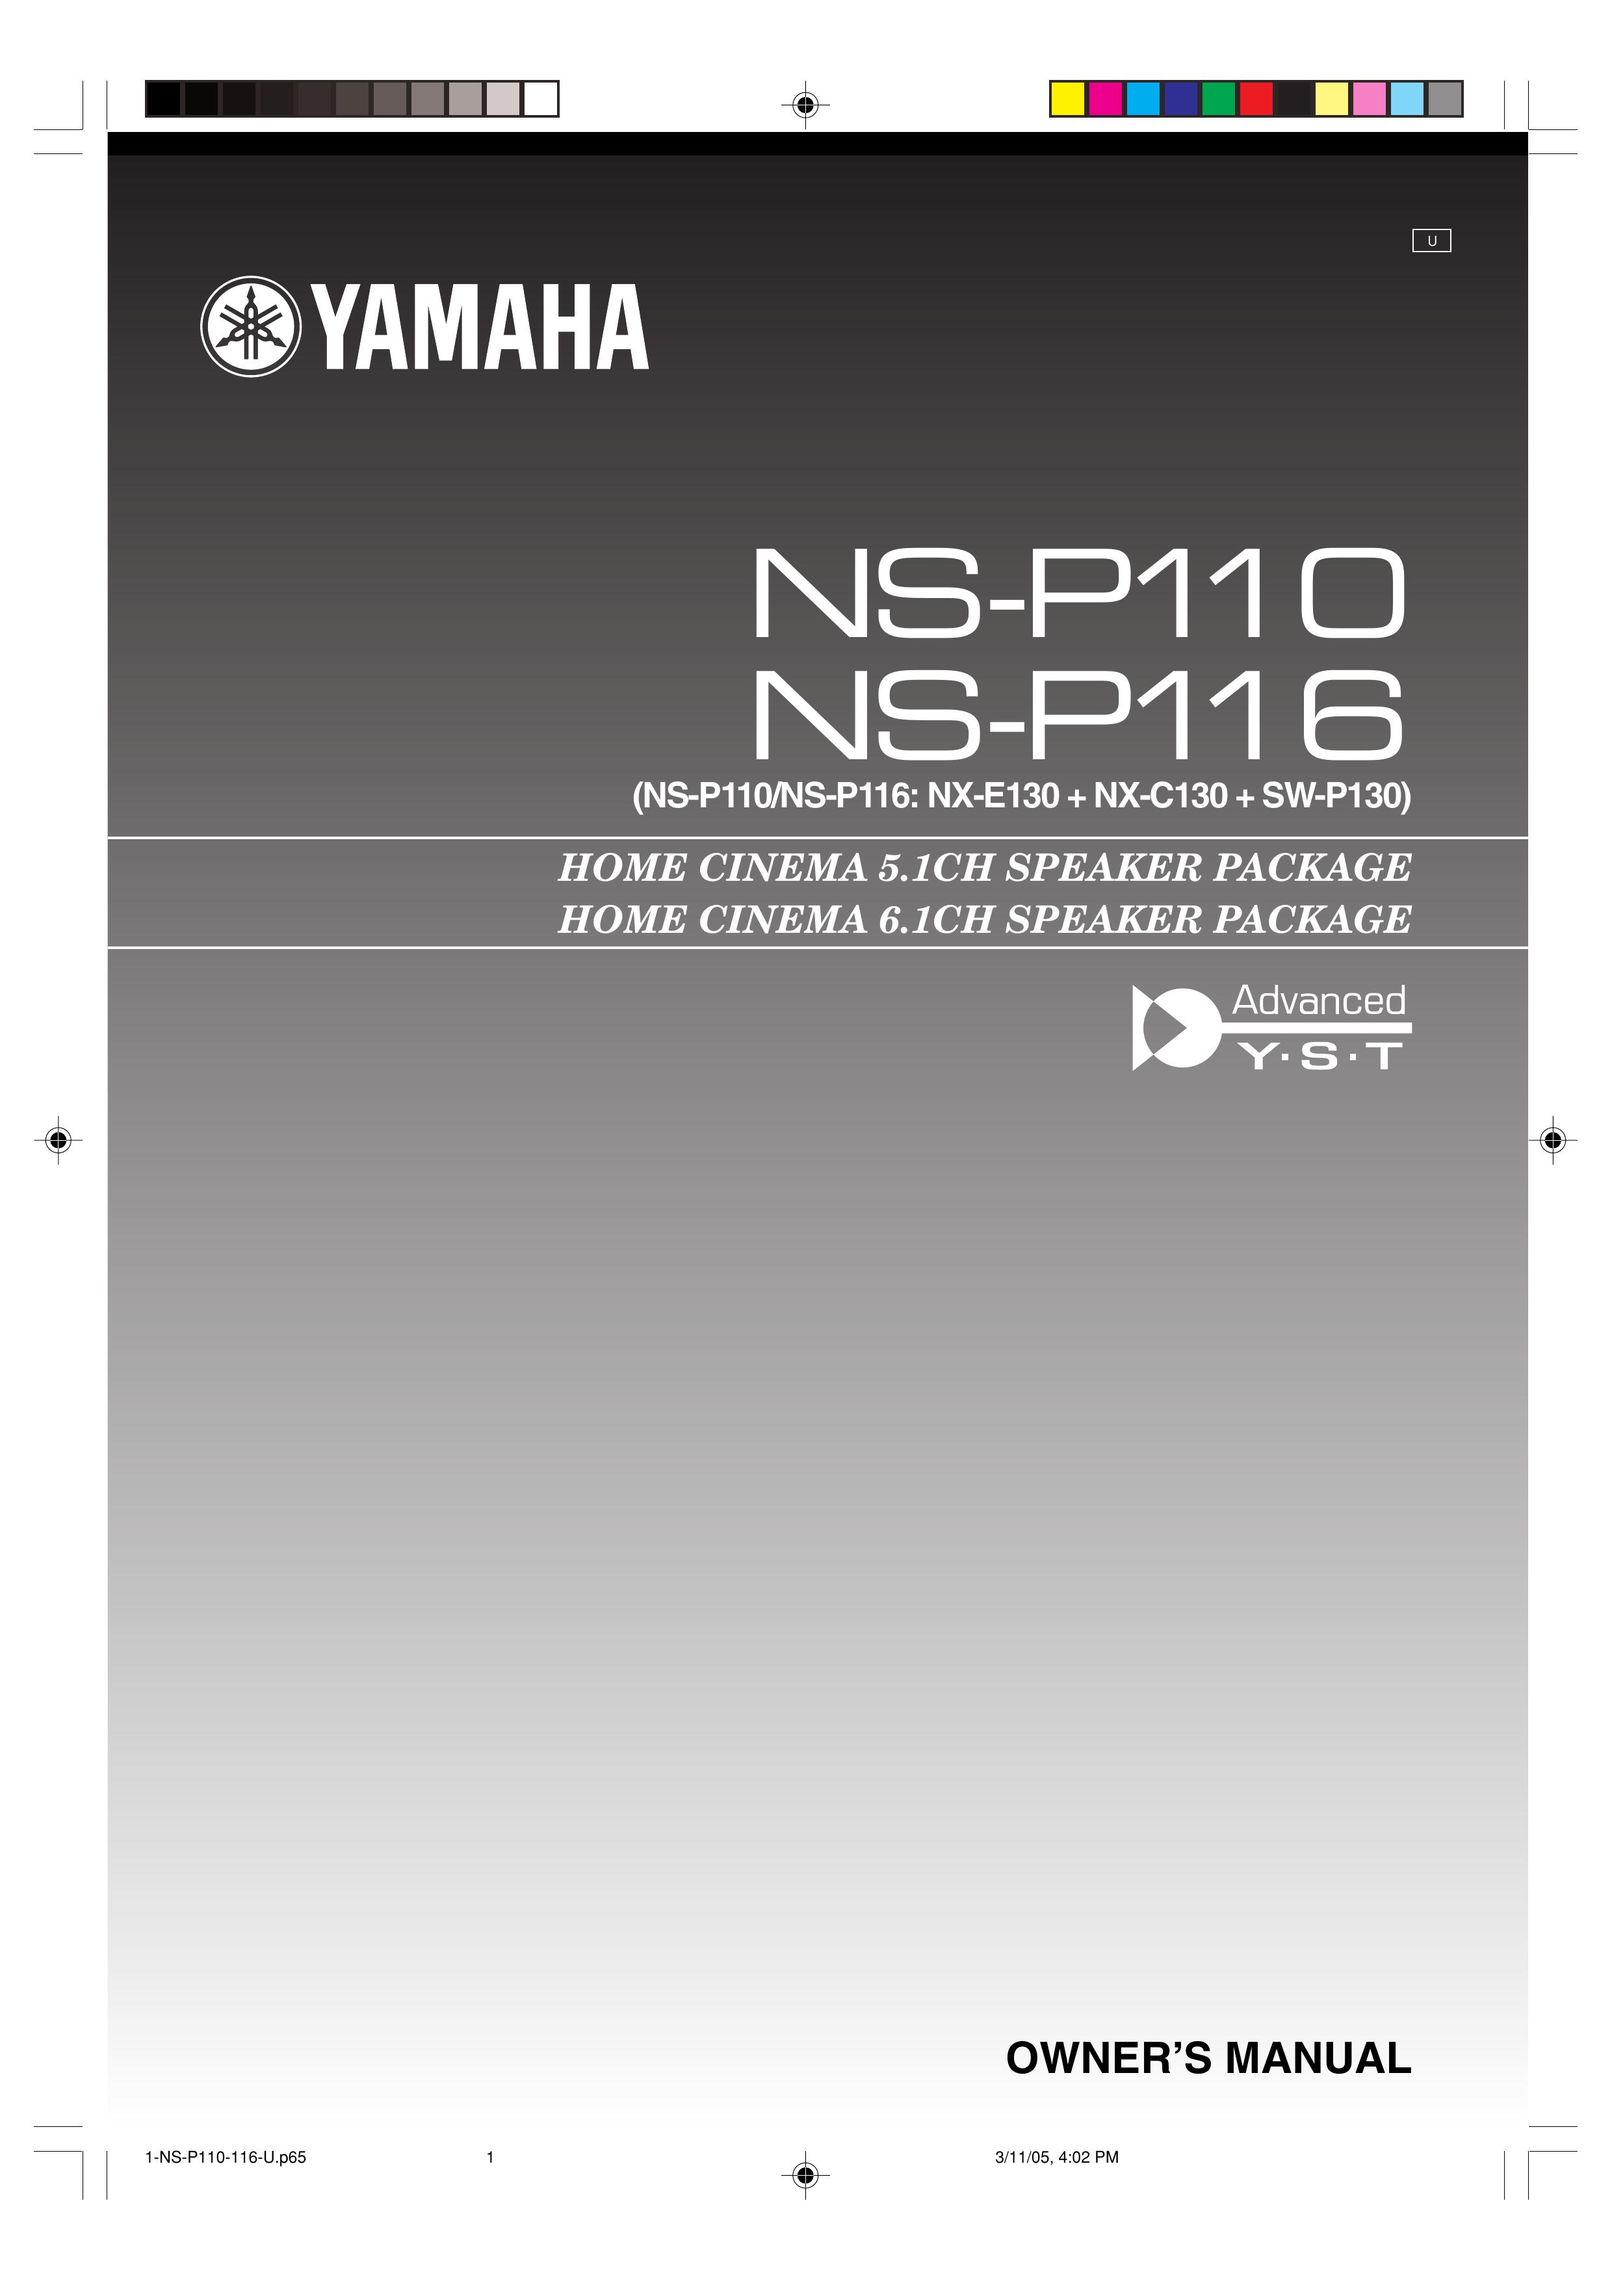 Yamaha NS-P116 Speaker System User Manual